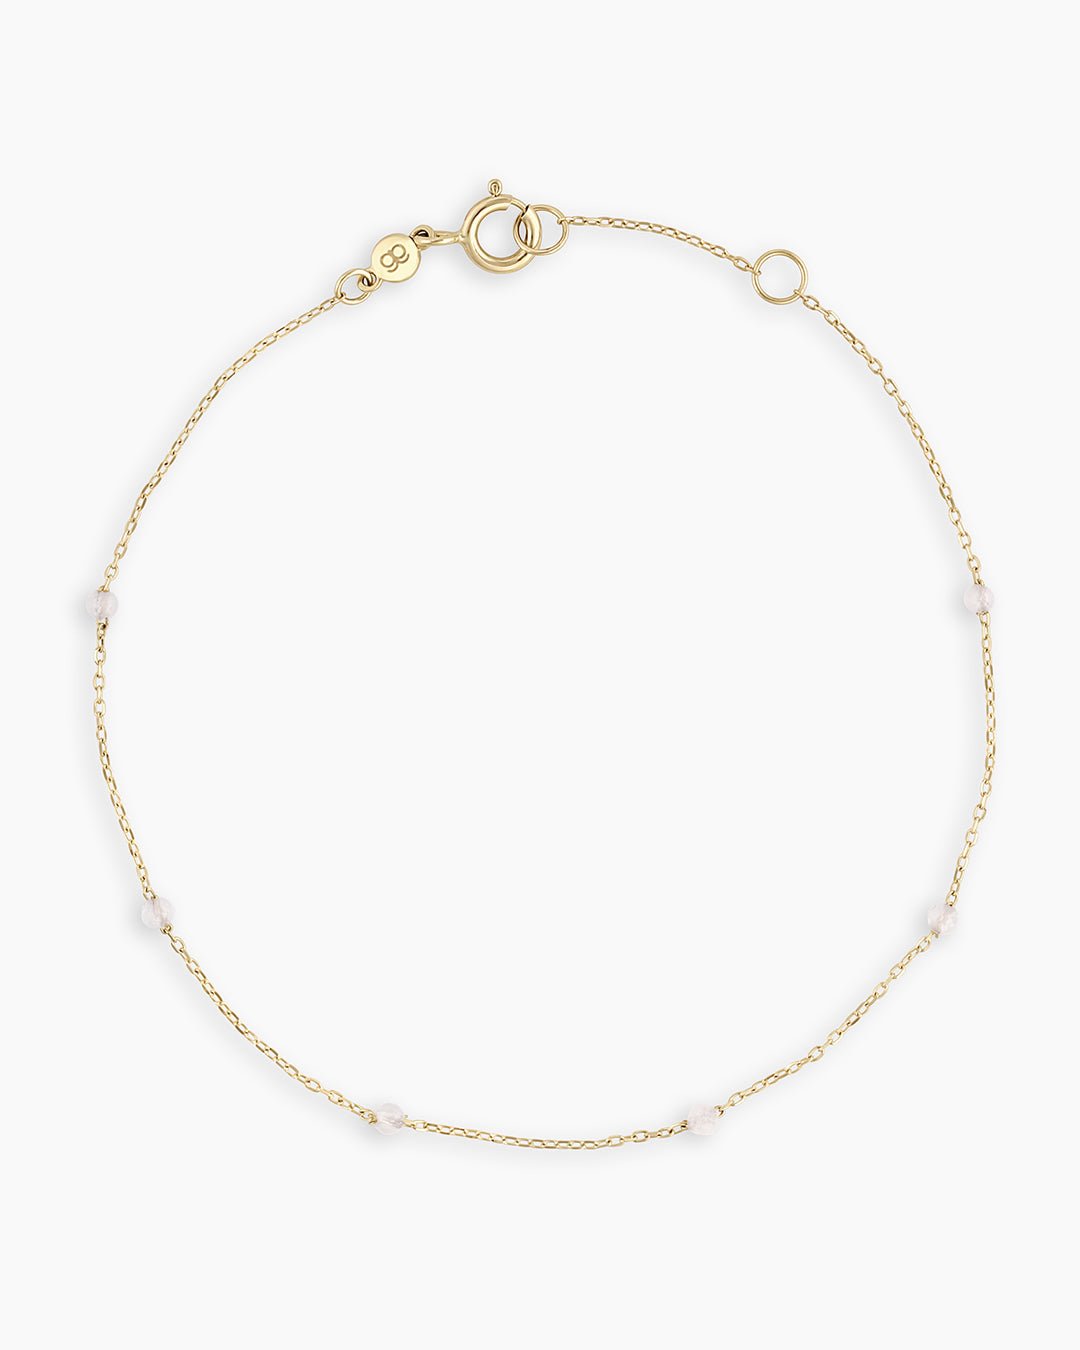 White TopazNewport Bracelet || option::14k Solid Gold, White Topaz - April